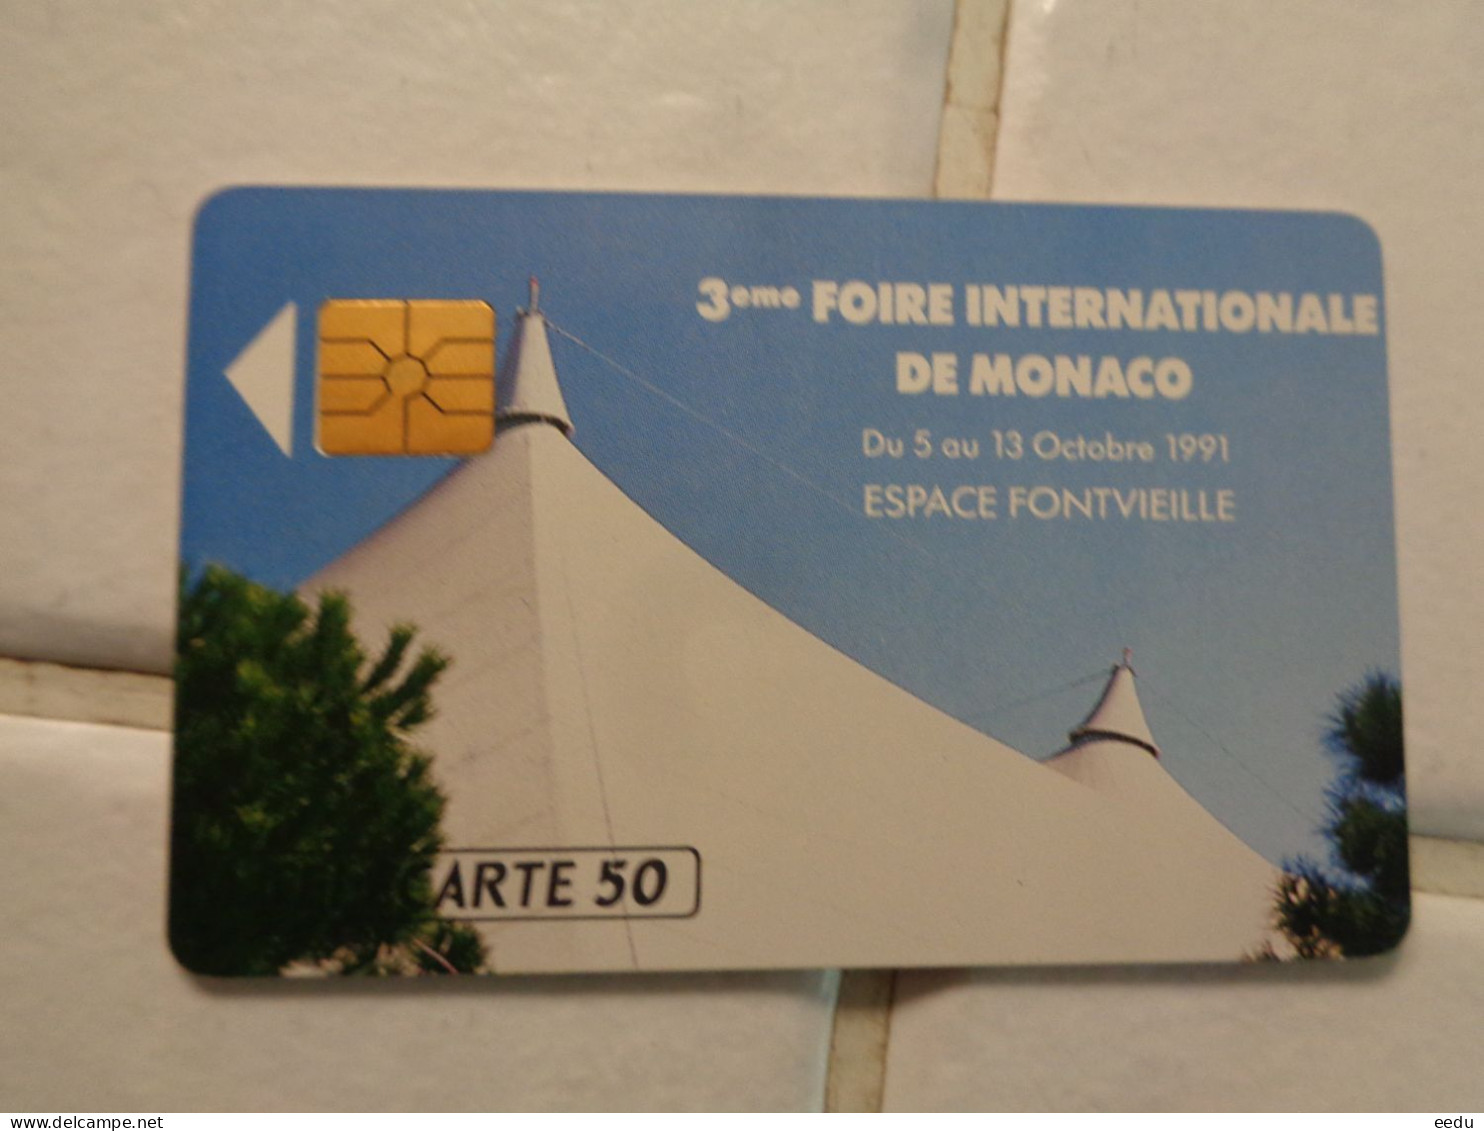 Monaco Phonecard - Monaco